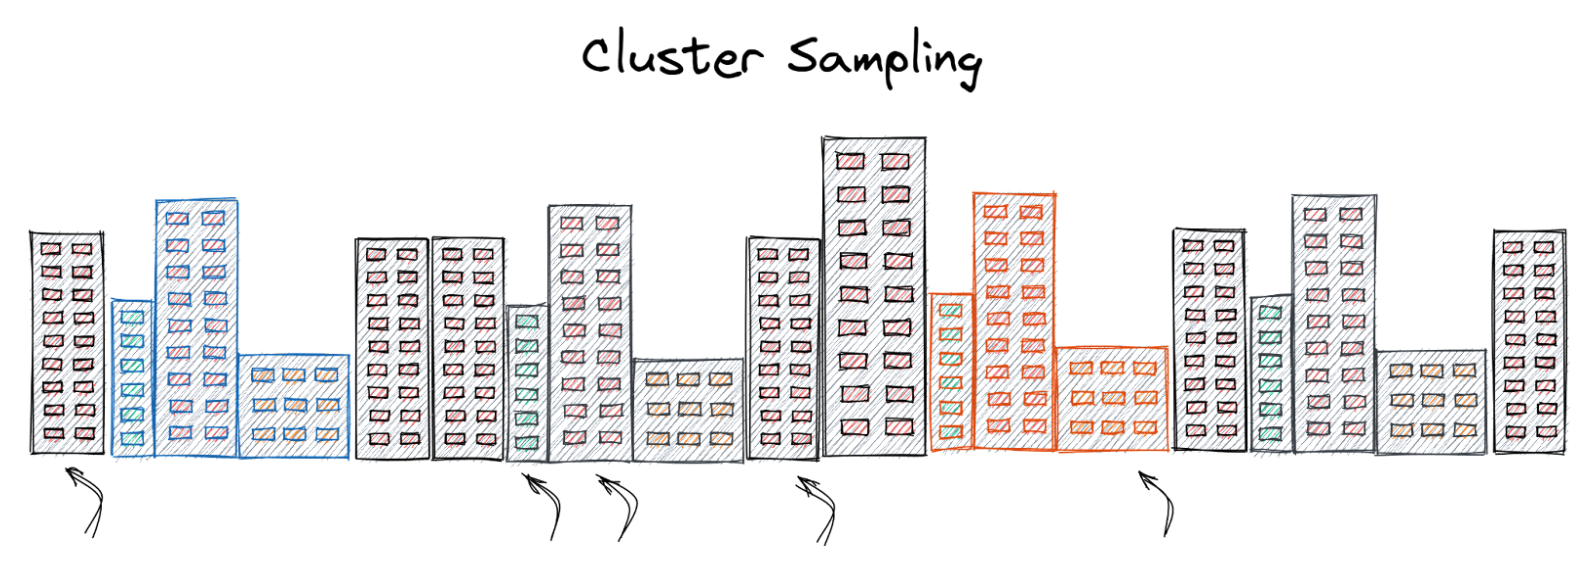 Cluster Sampling in statistics cheat sheet